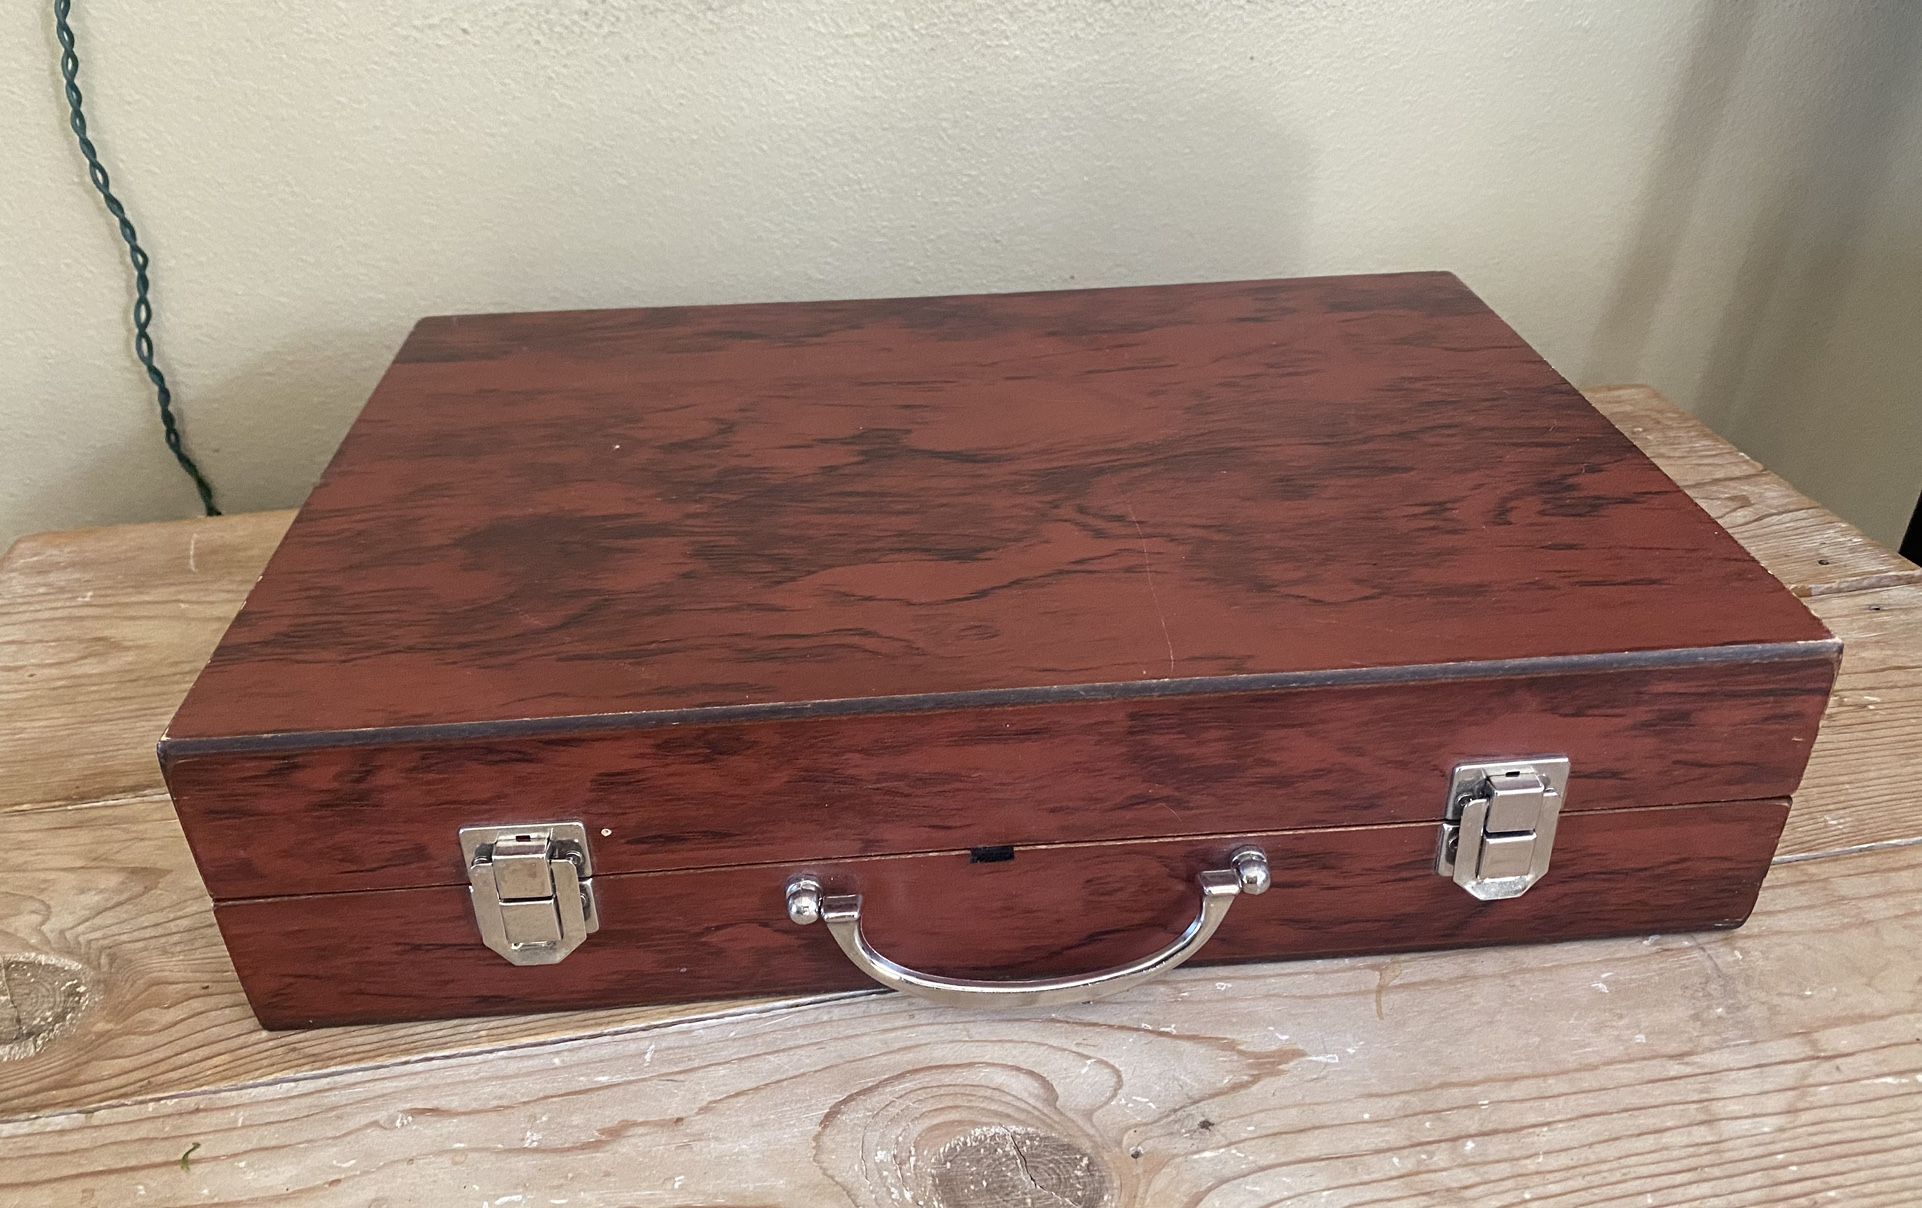 Creative Mark Capri 2 Deluxe Wood Artist Paint Box - Storage for Art Supplies, P